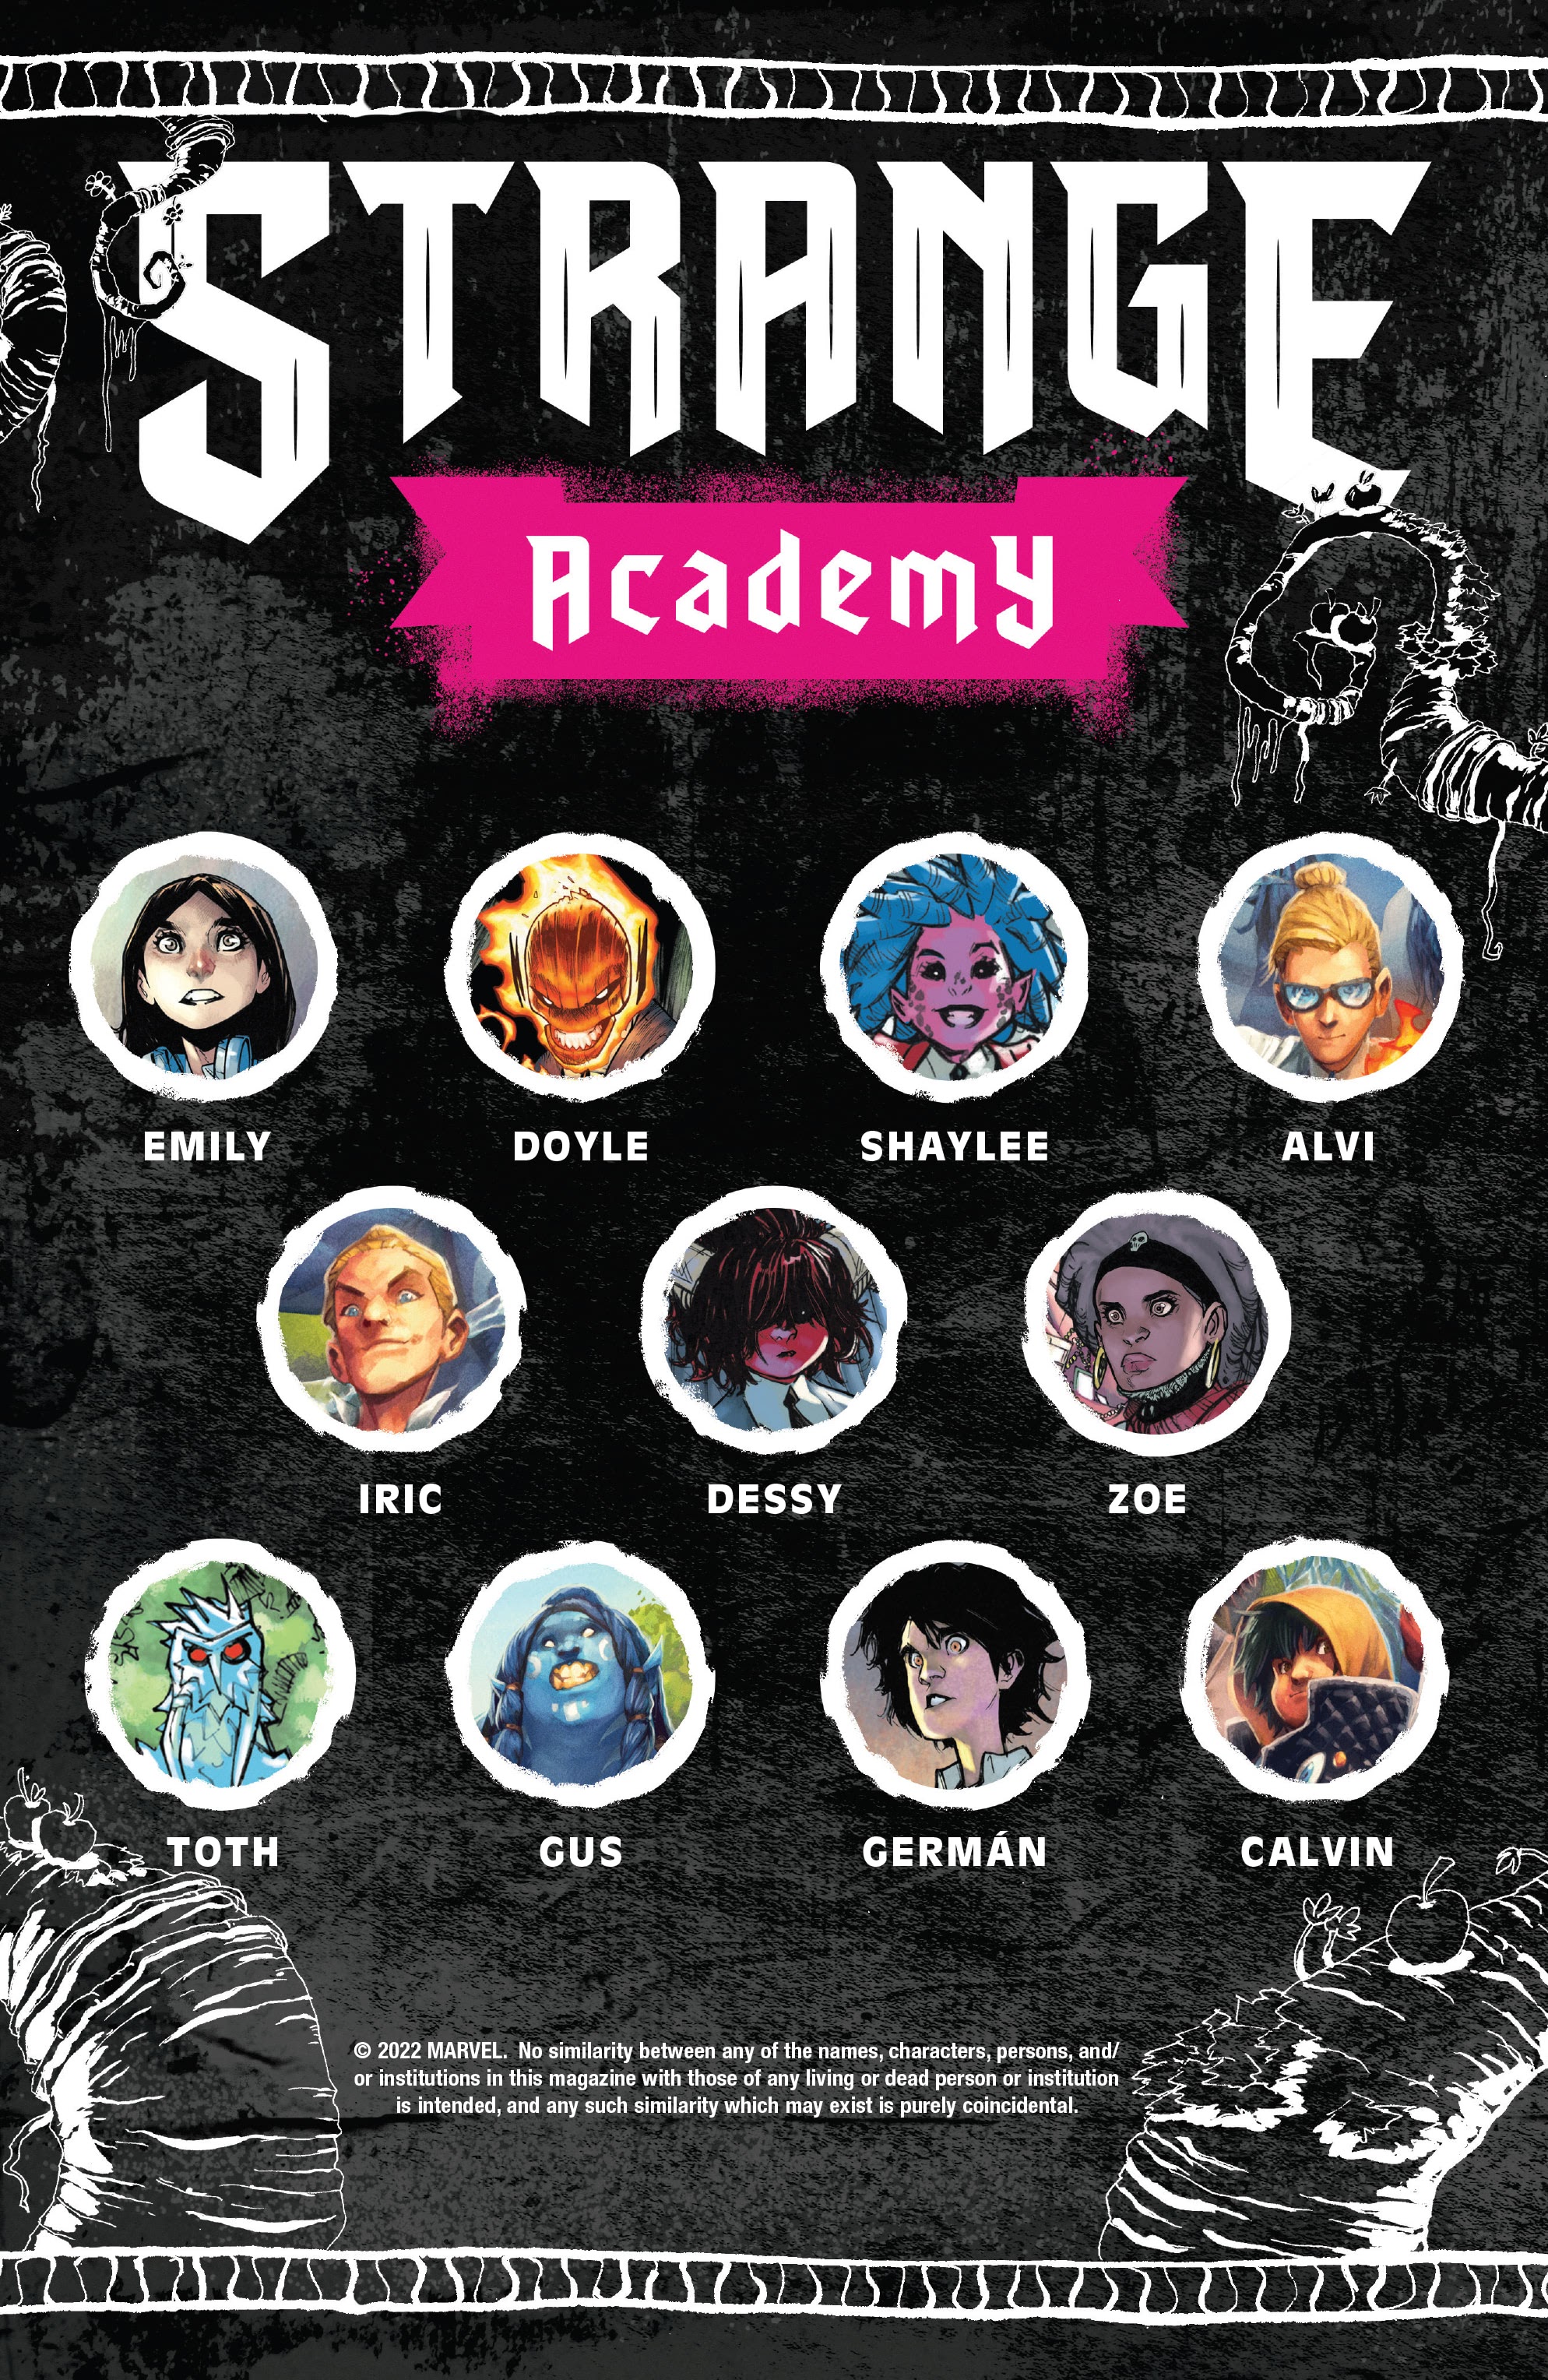 Read online Strange Academy comic -  Issue #17 - 3